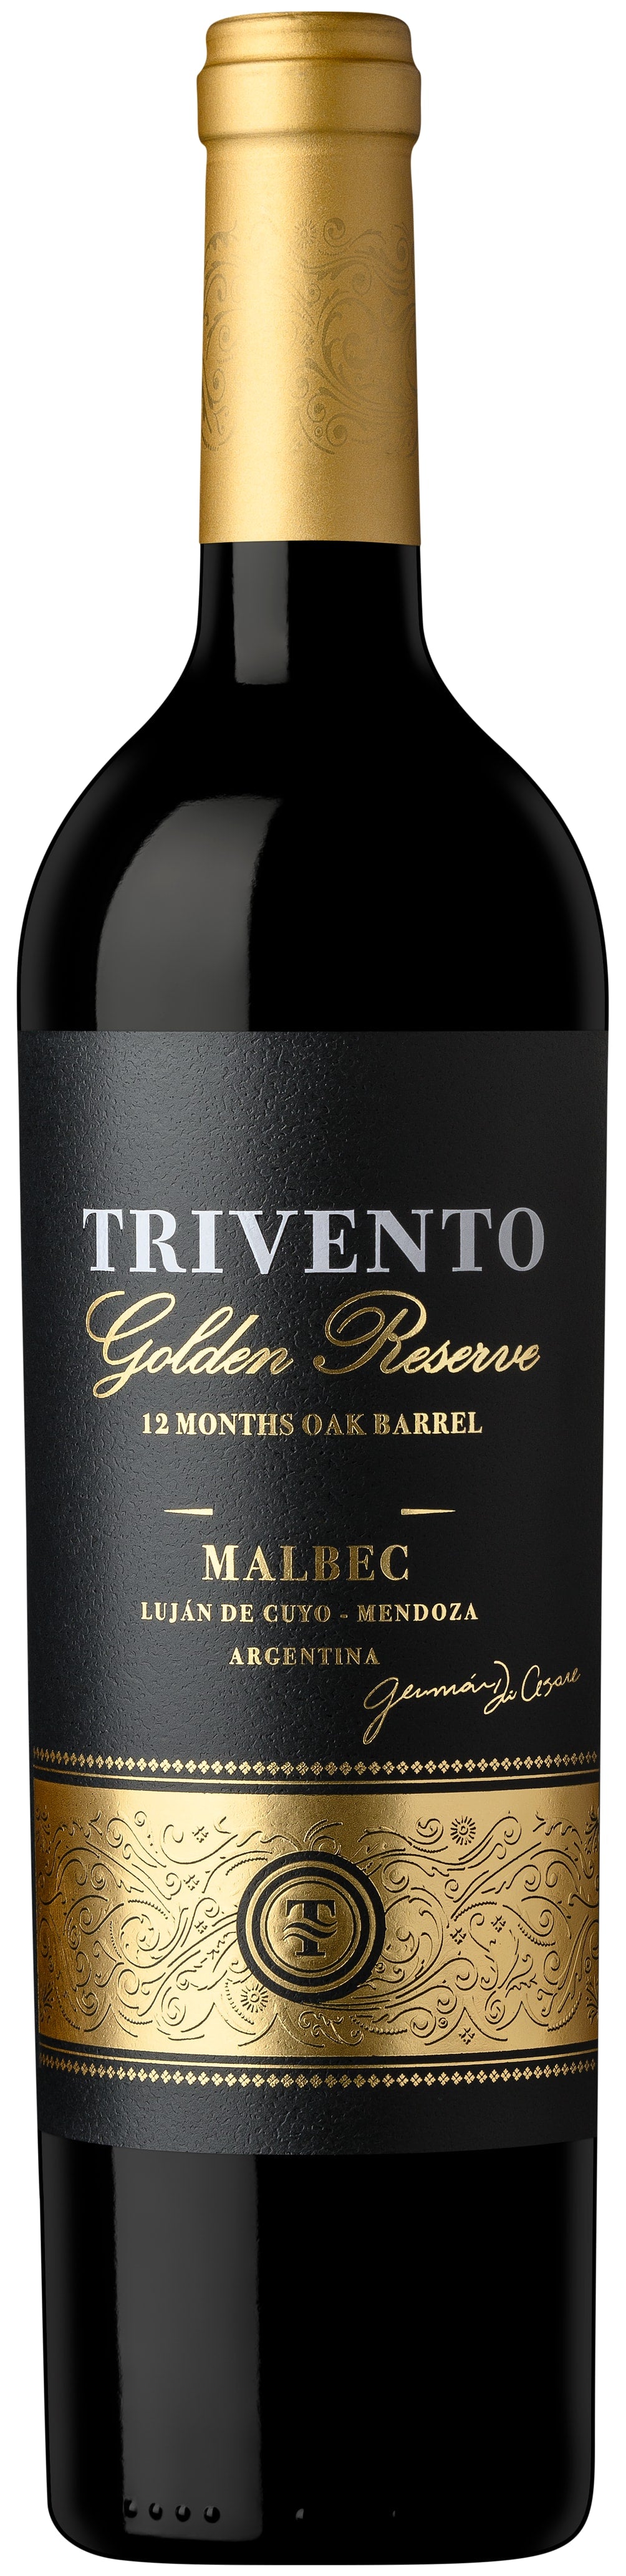 Trivento  Golden Reserve Malbec